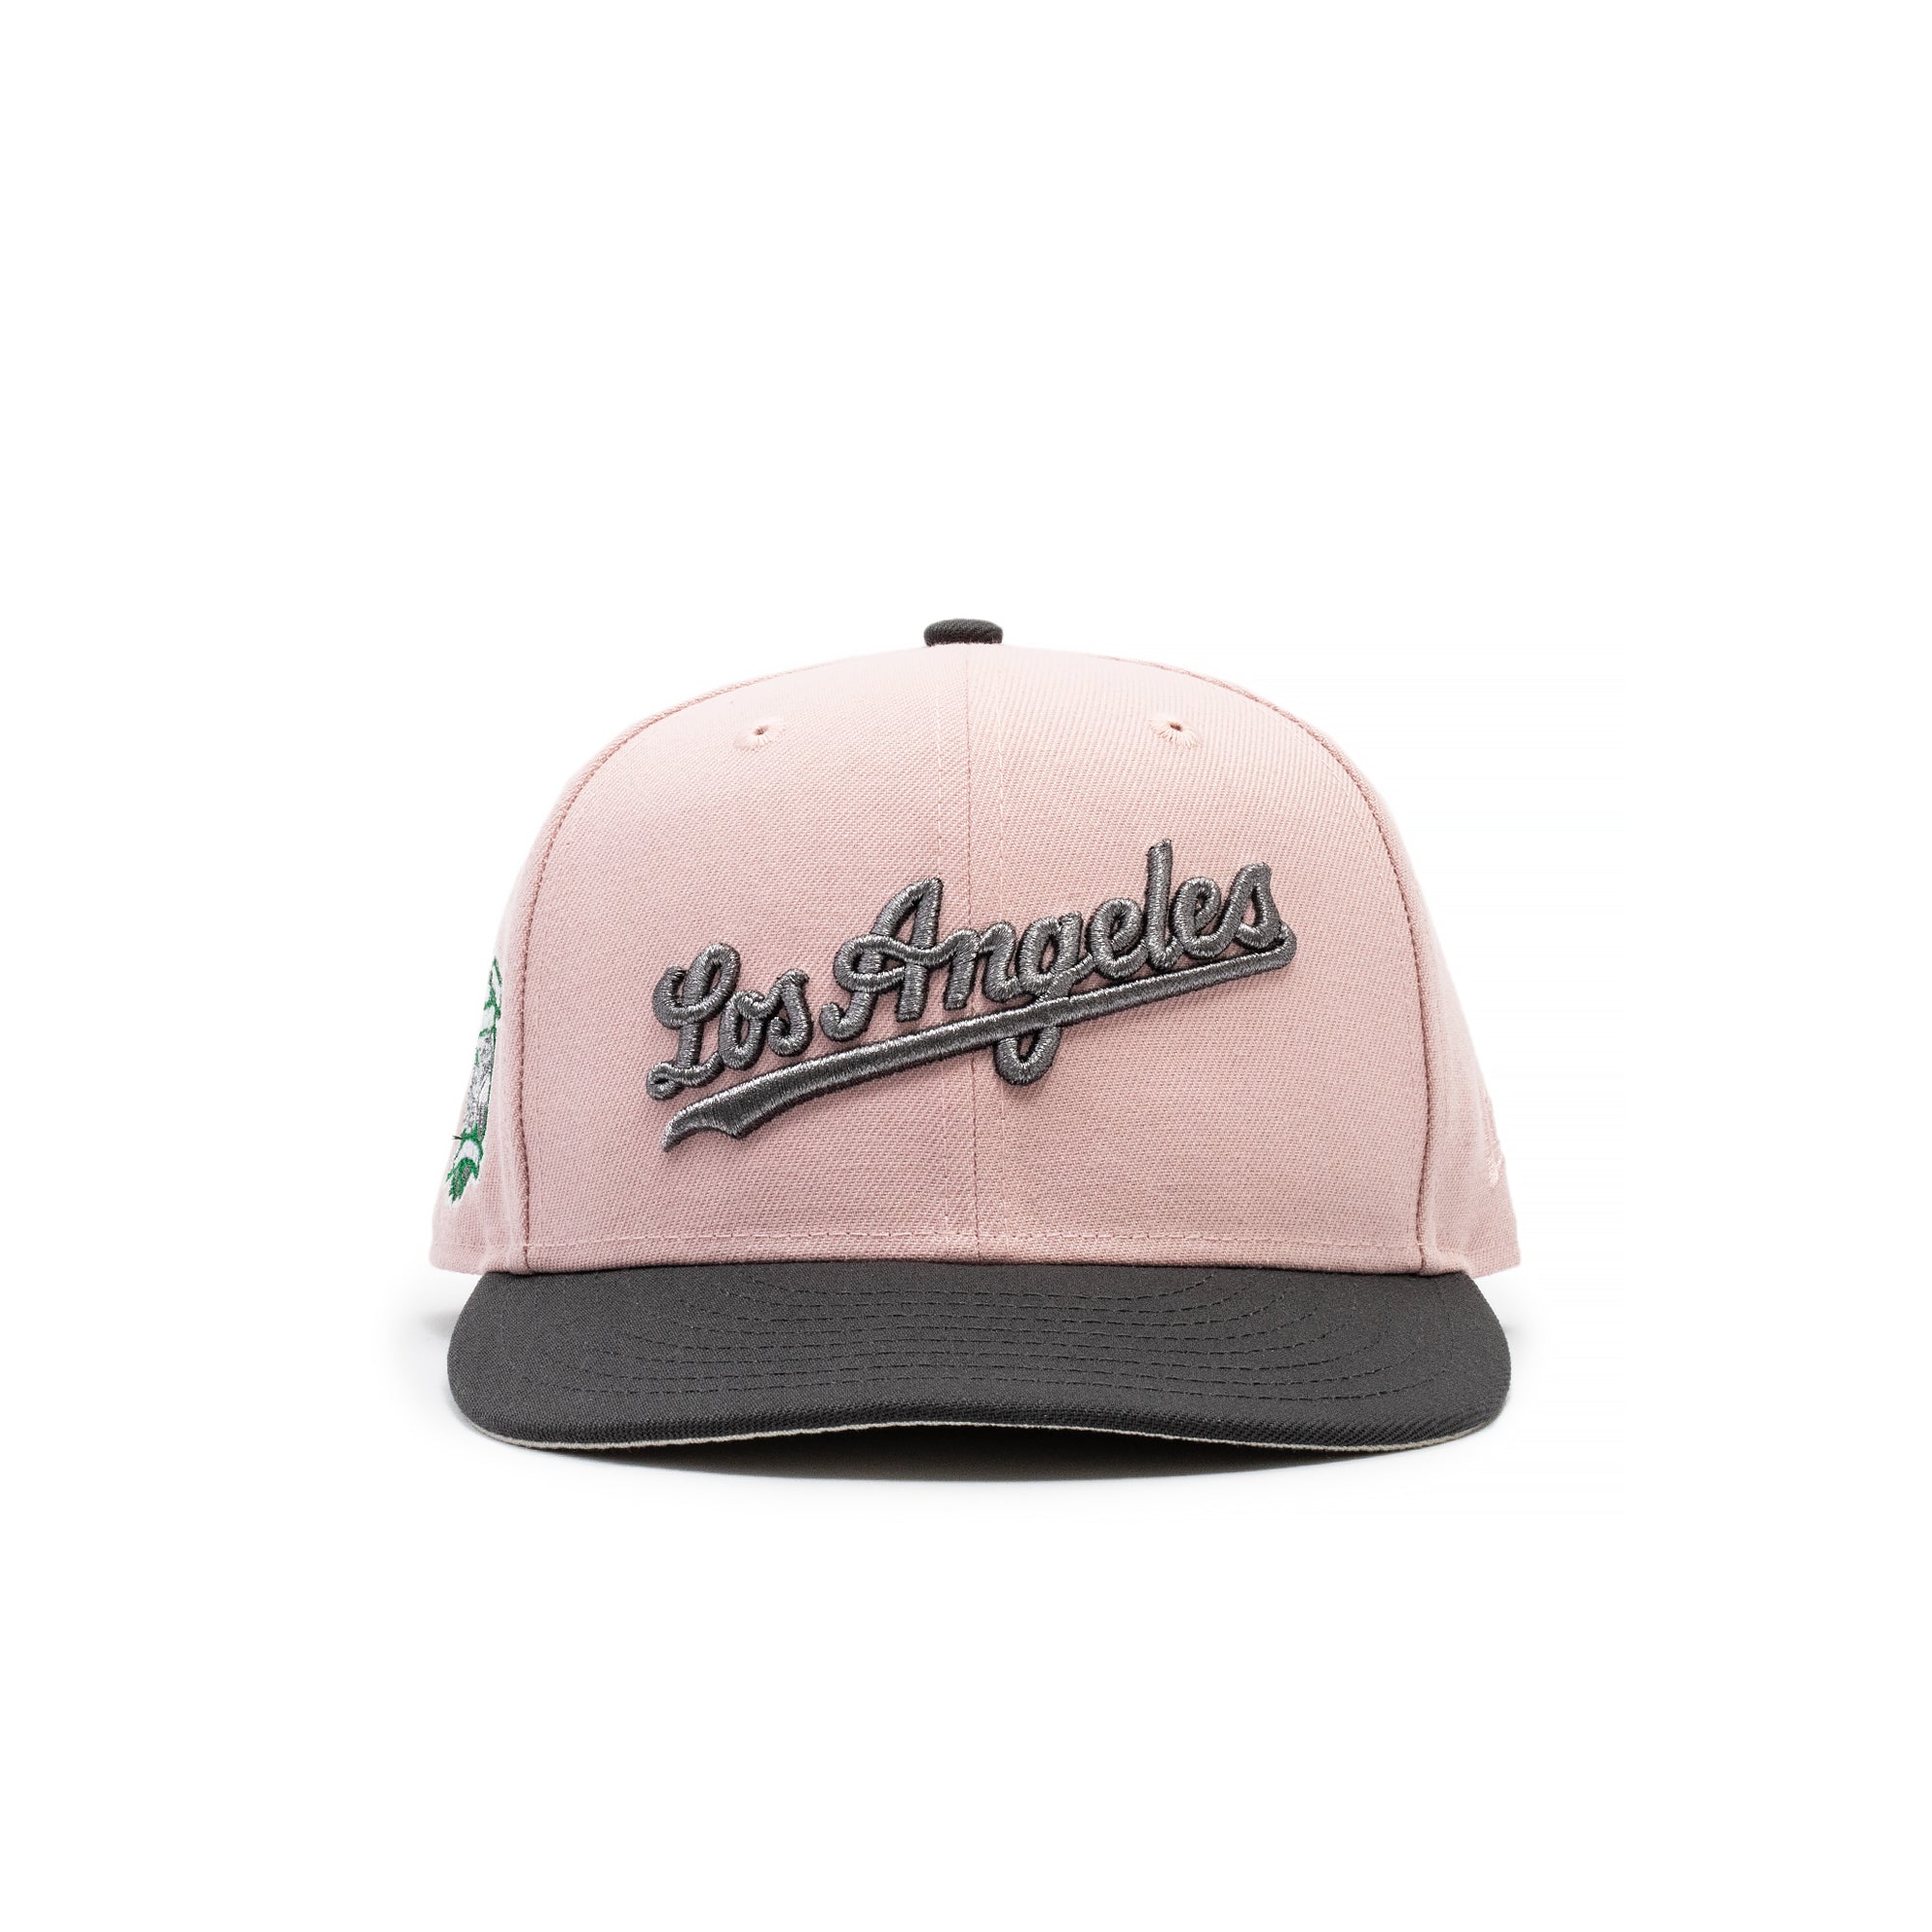 New Era SheStylesFitteds Dodgers Hat